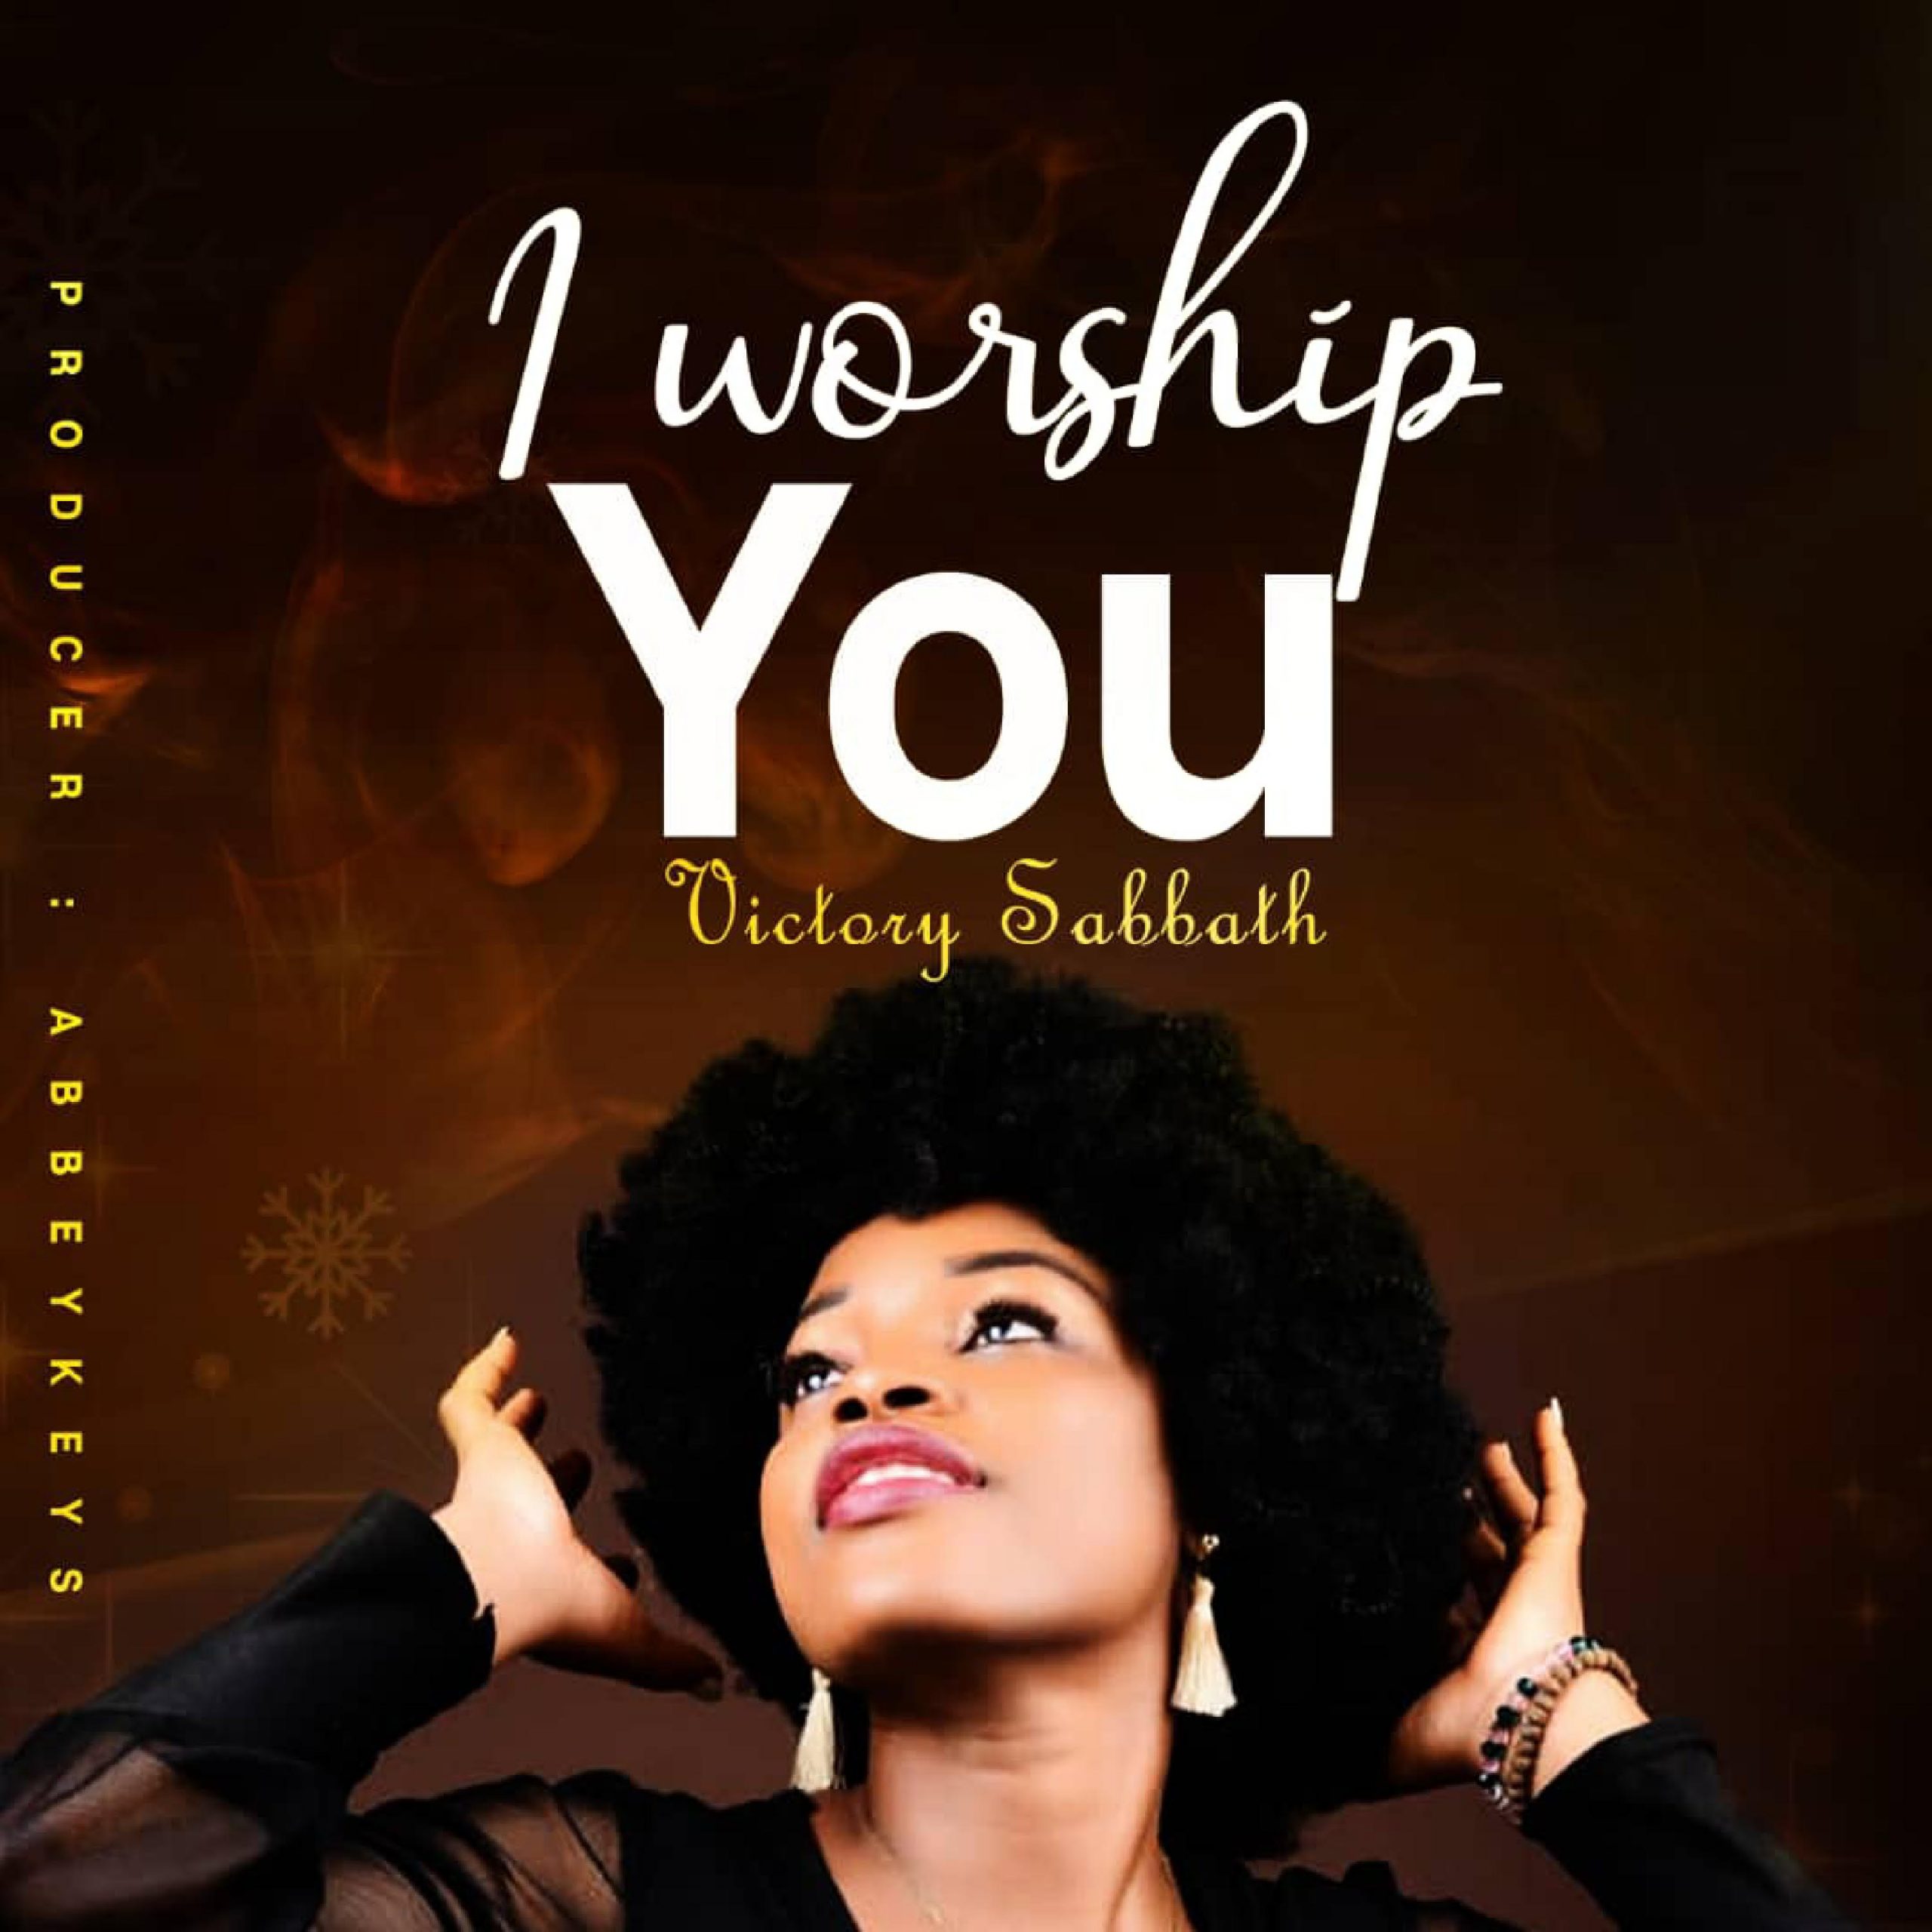 Victory Sabbath - I Worship You